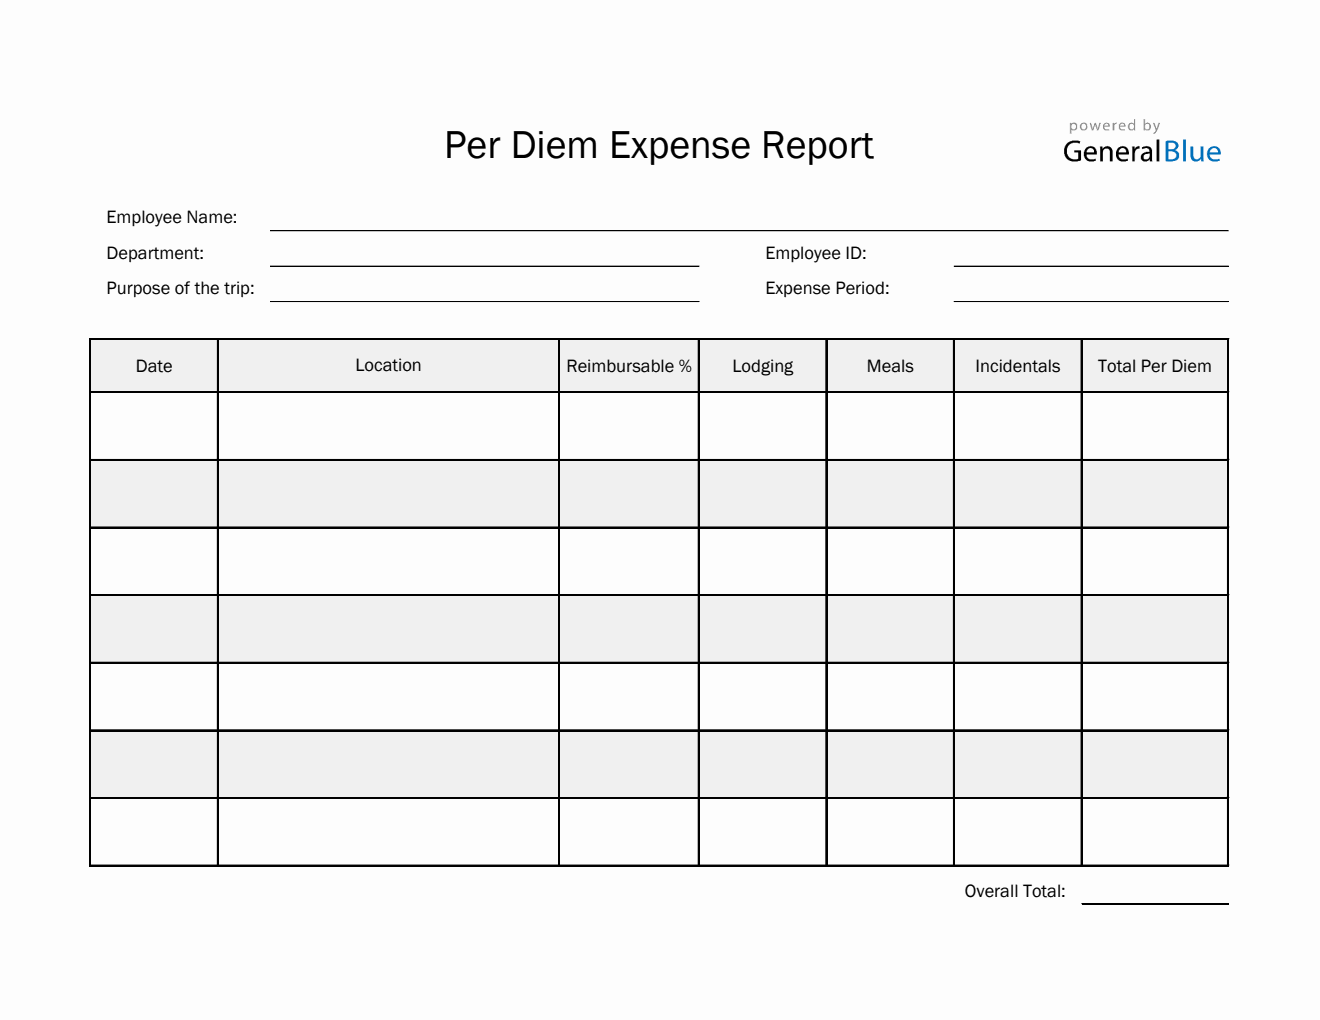 Per Diem Expense Report Template in Excel (Striped)